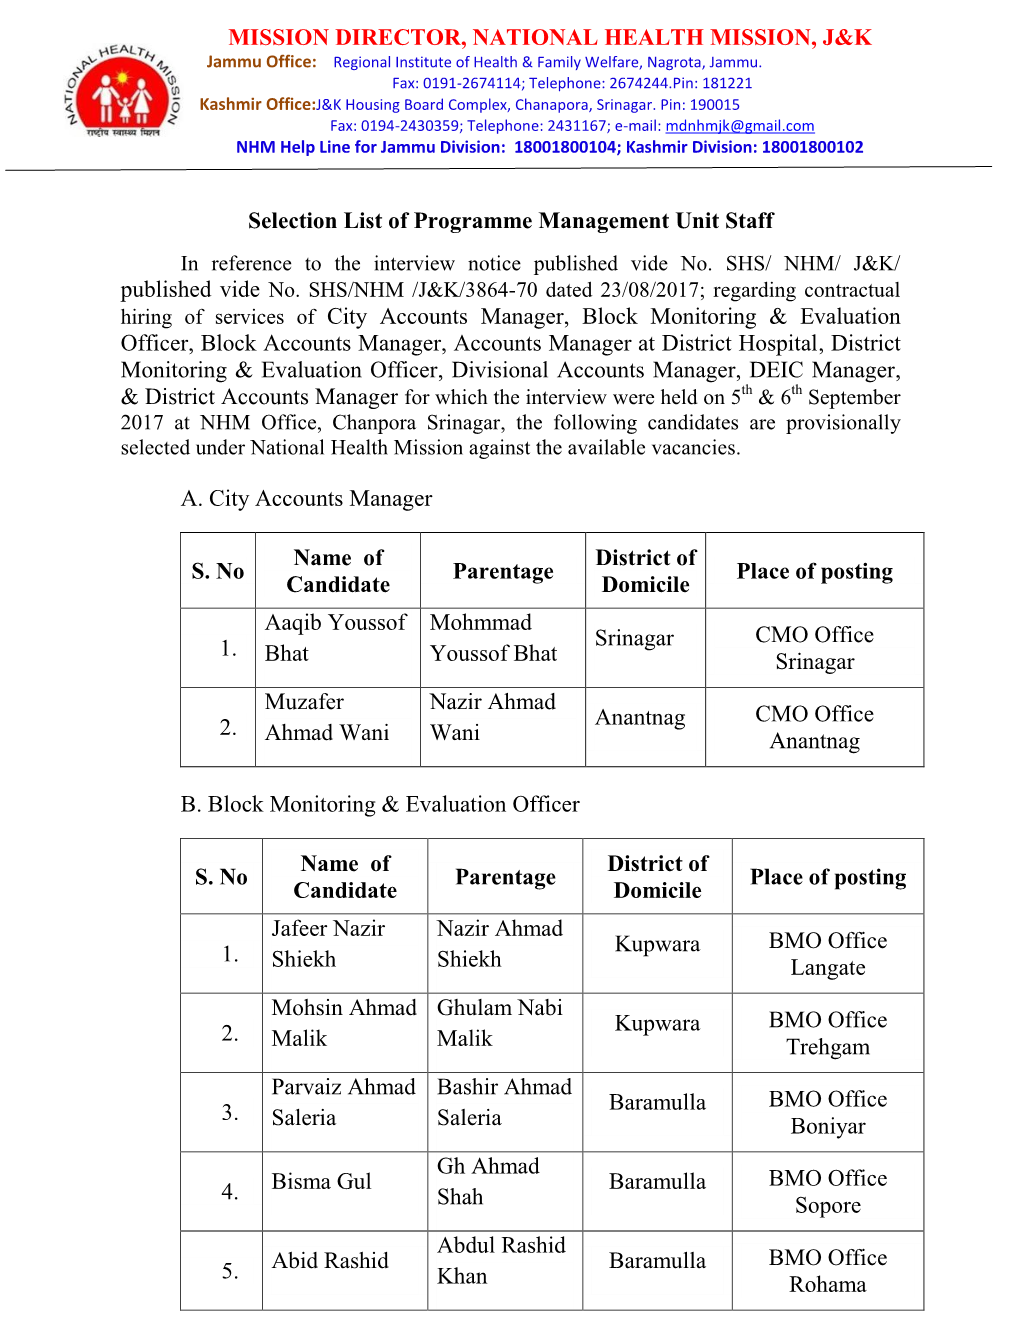 Selection List of Programme Management Unit Staff